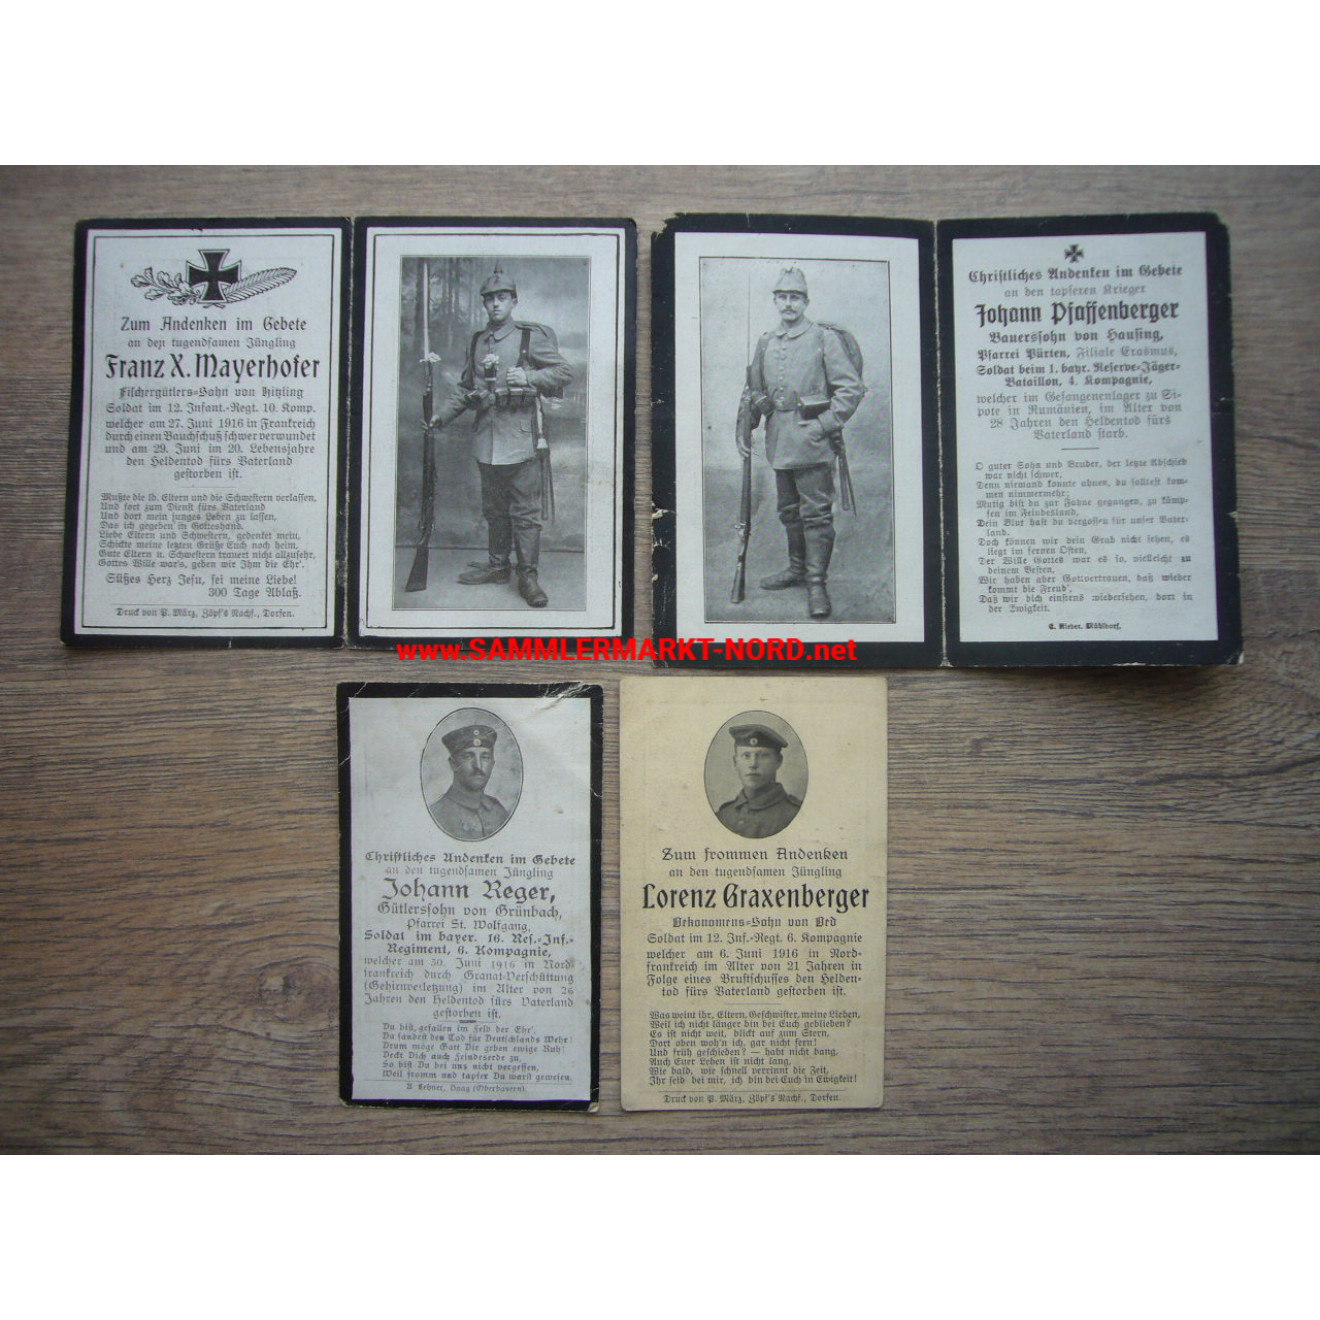 4 x death sheet 1st World War - mostly infantry regiments